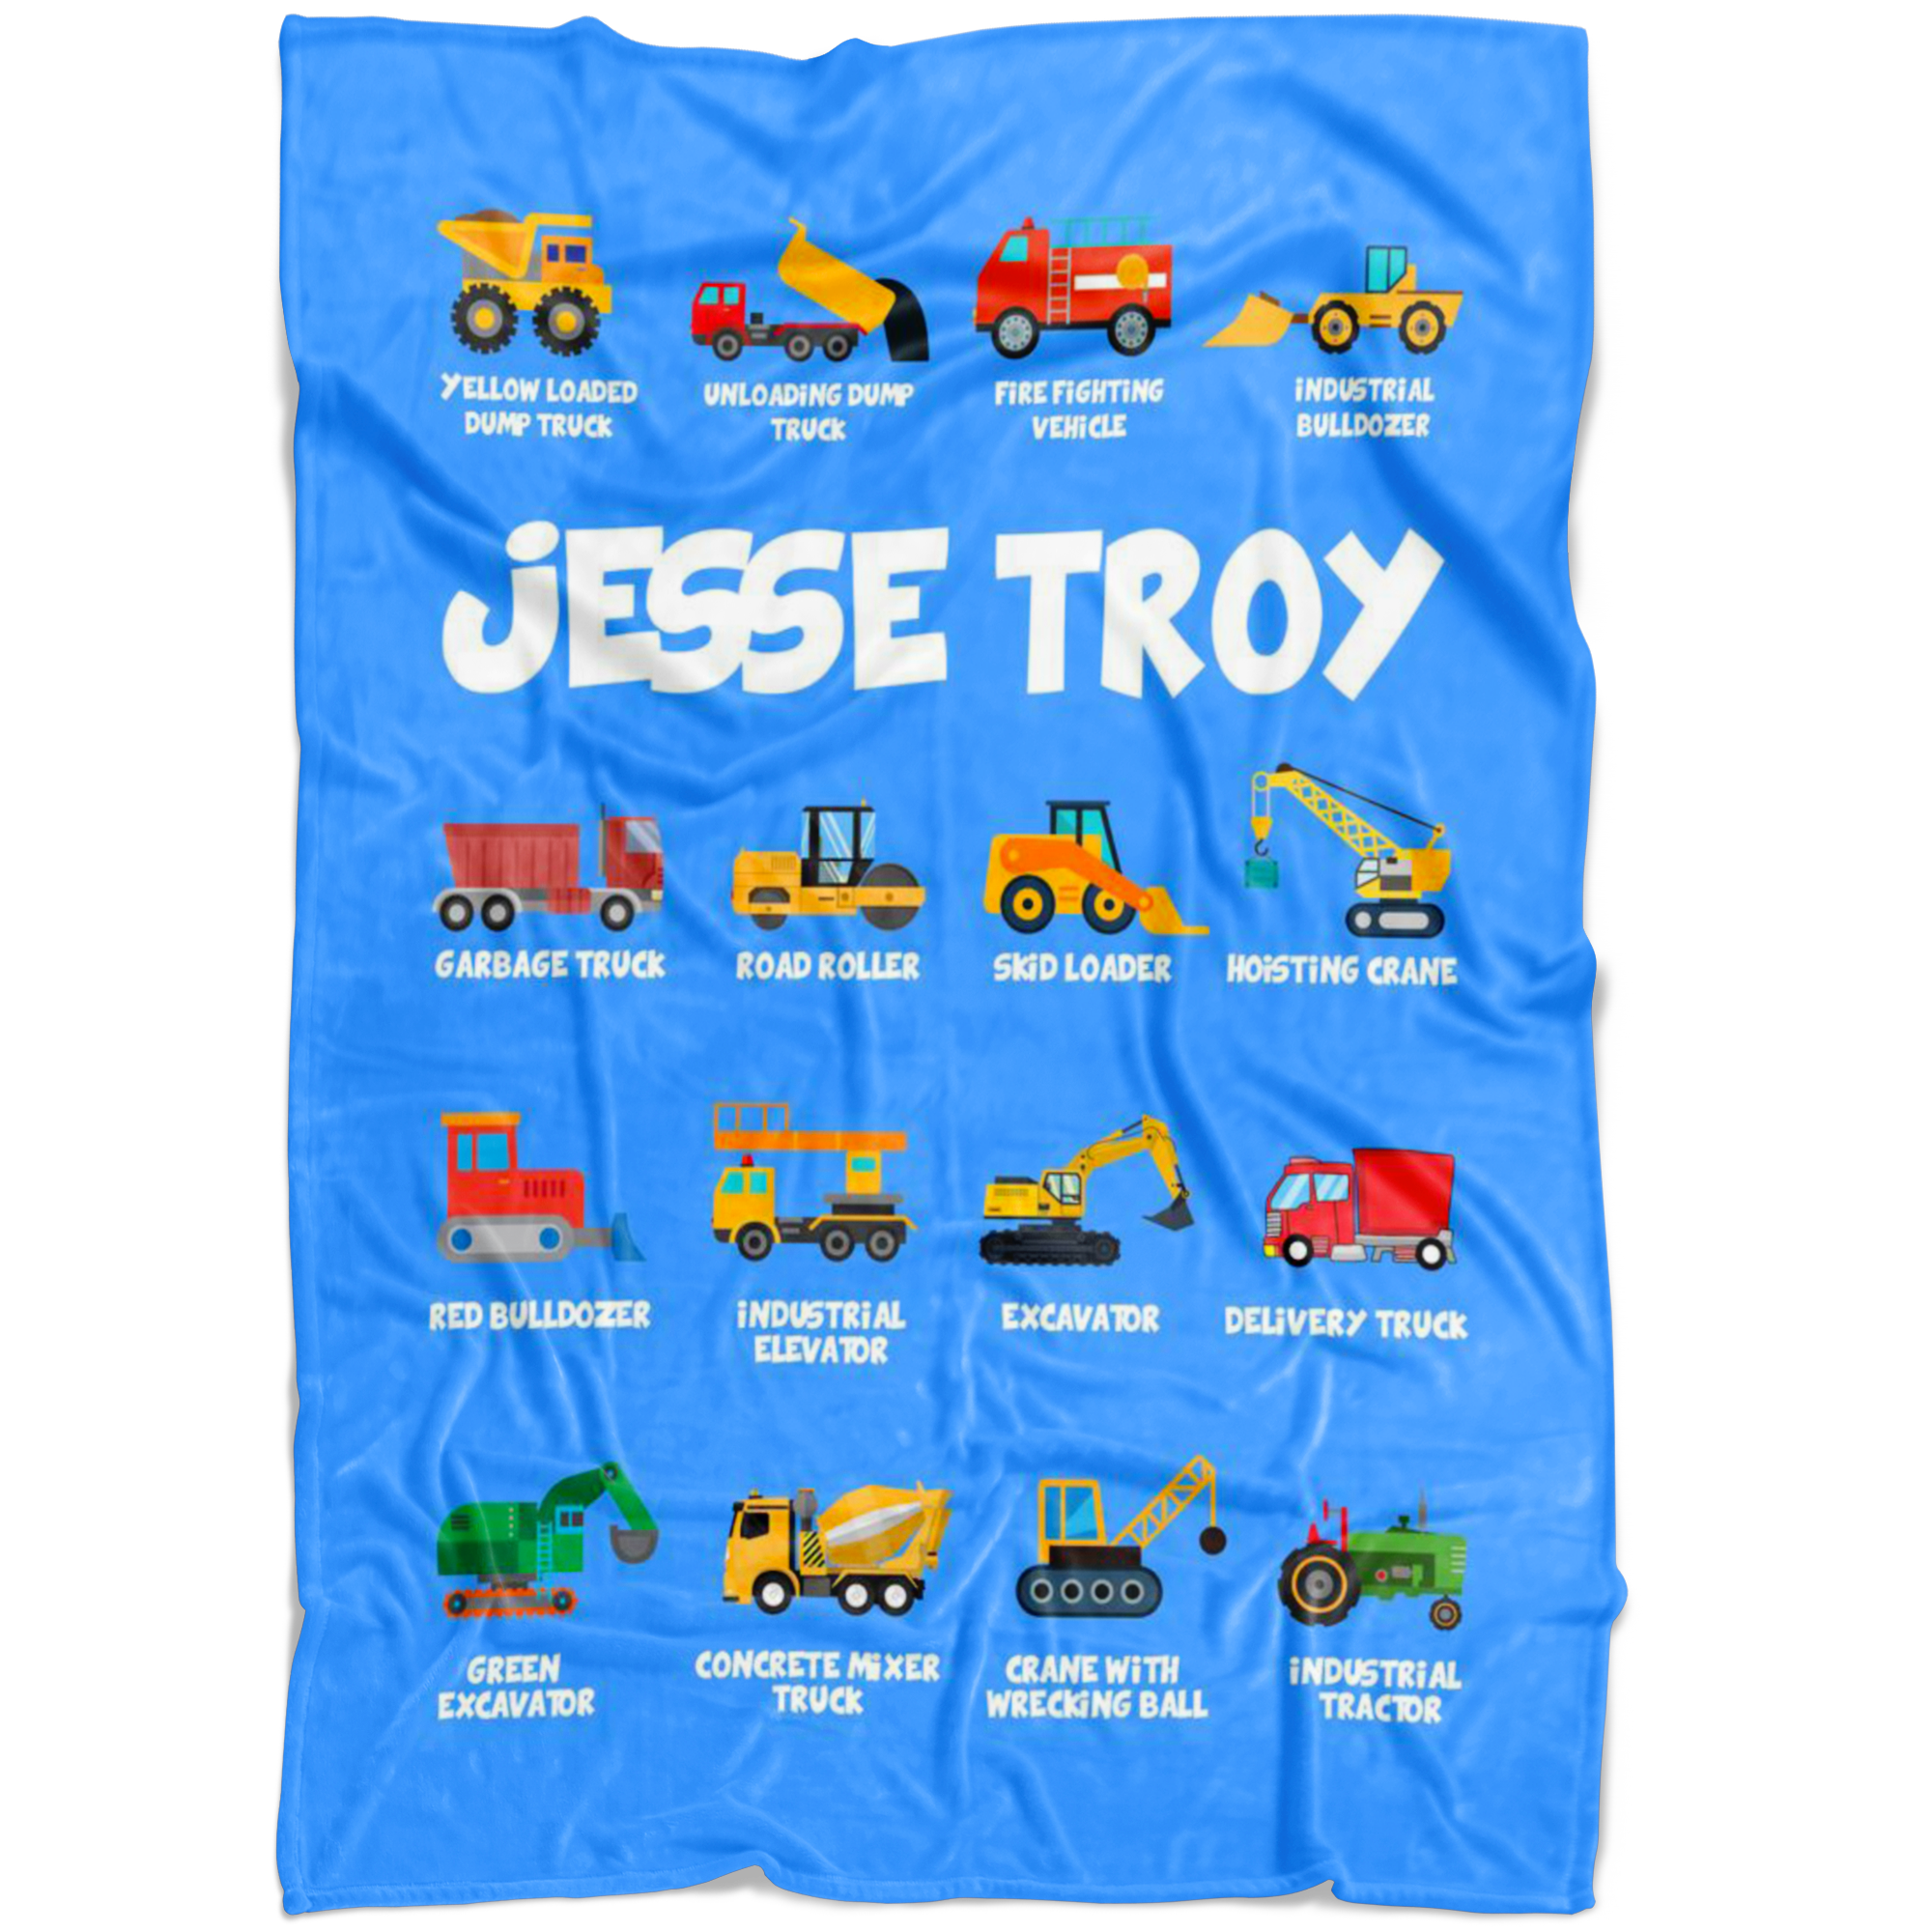 Jesse Troy Construction Blanket Blue